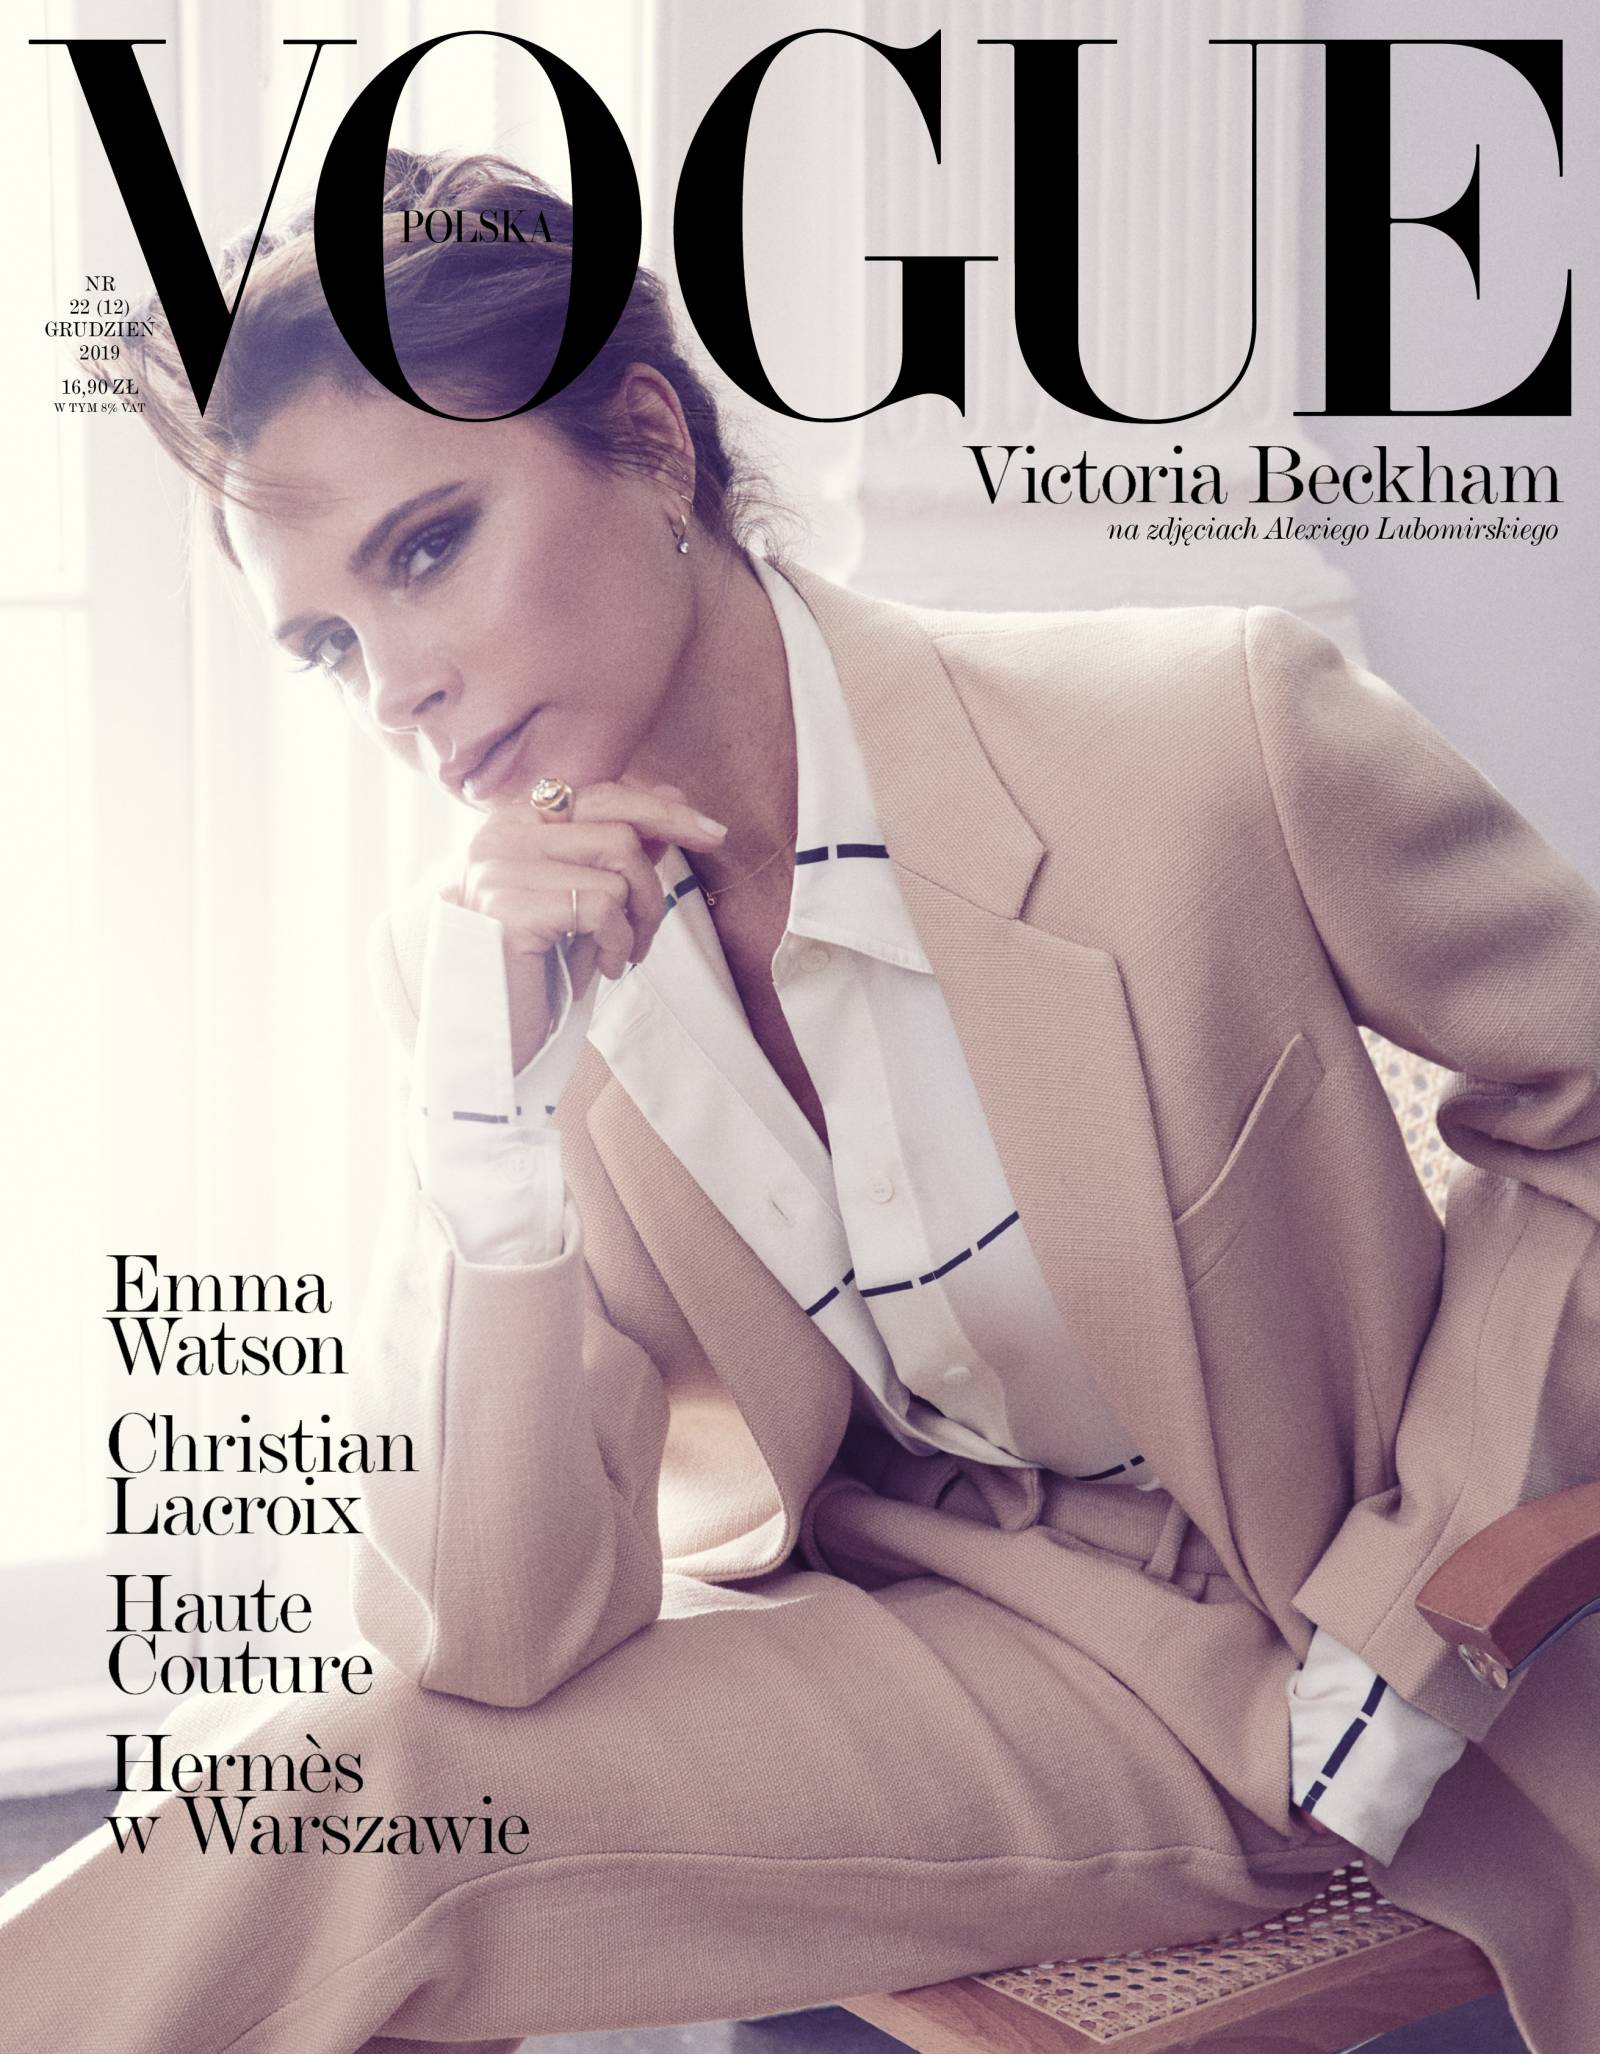 Victoria Beckham (Fot. Alexi Lubomirski dla Vogue Polska)